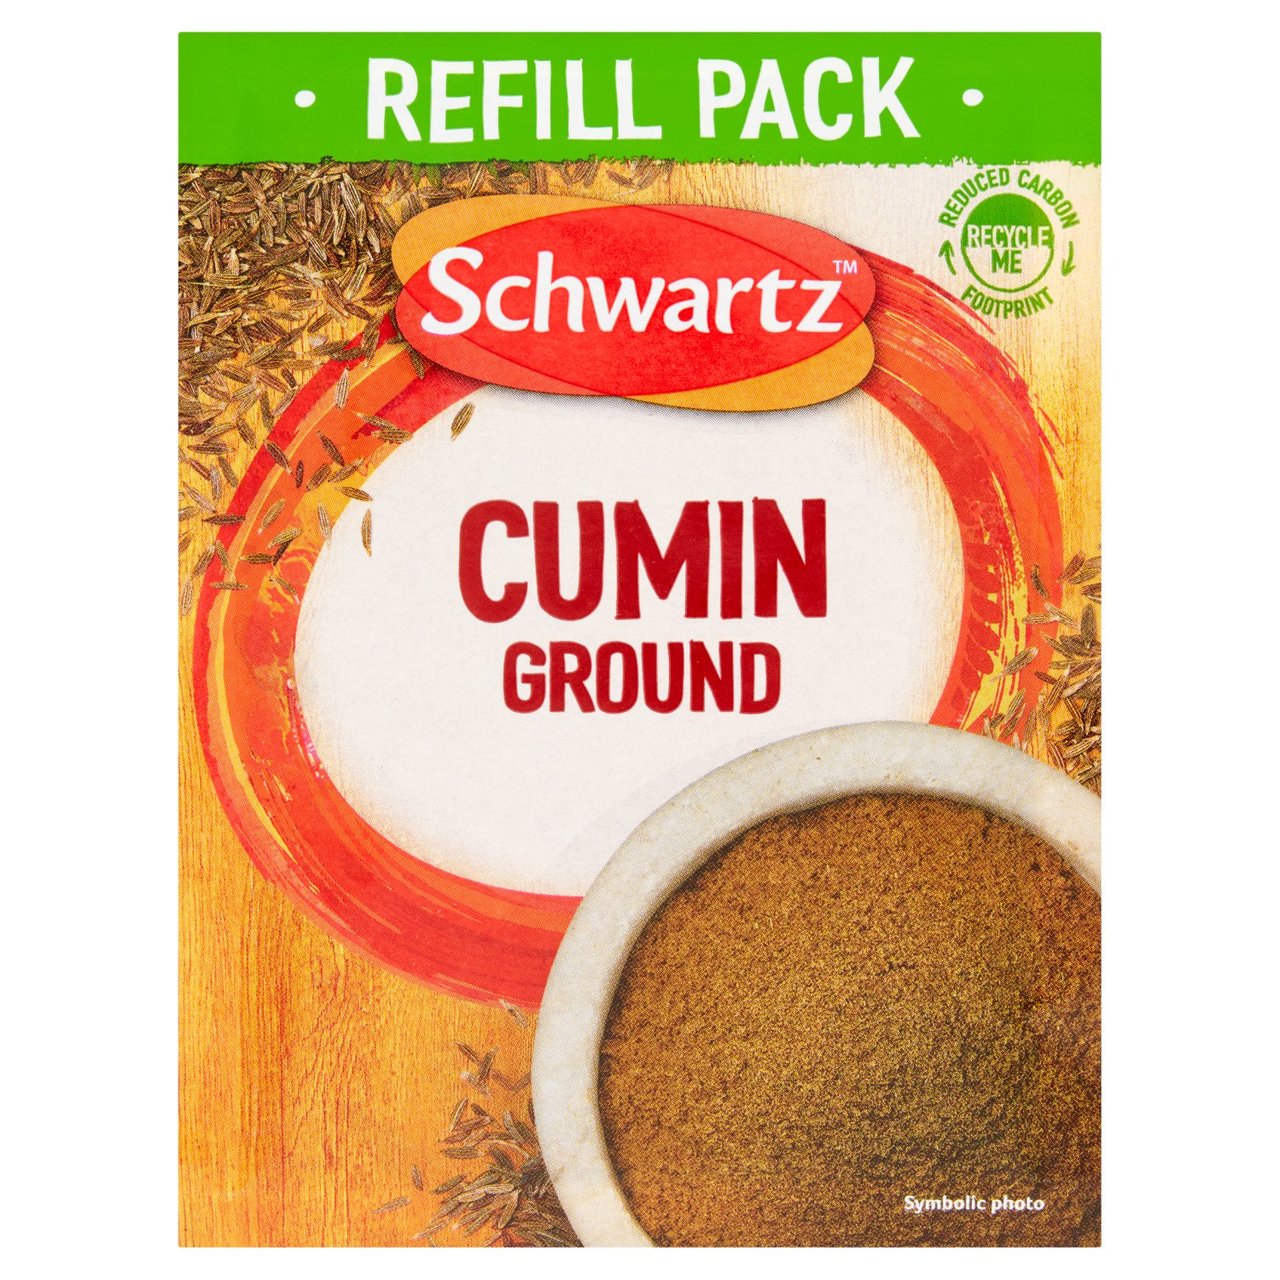 Schwartz Ground Cumin Refill Pack